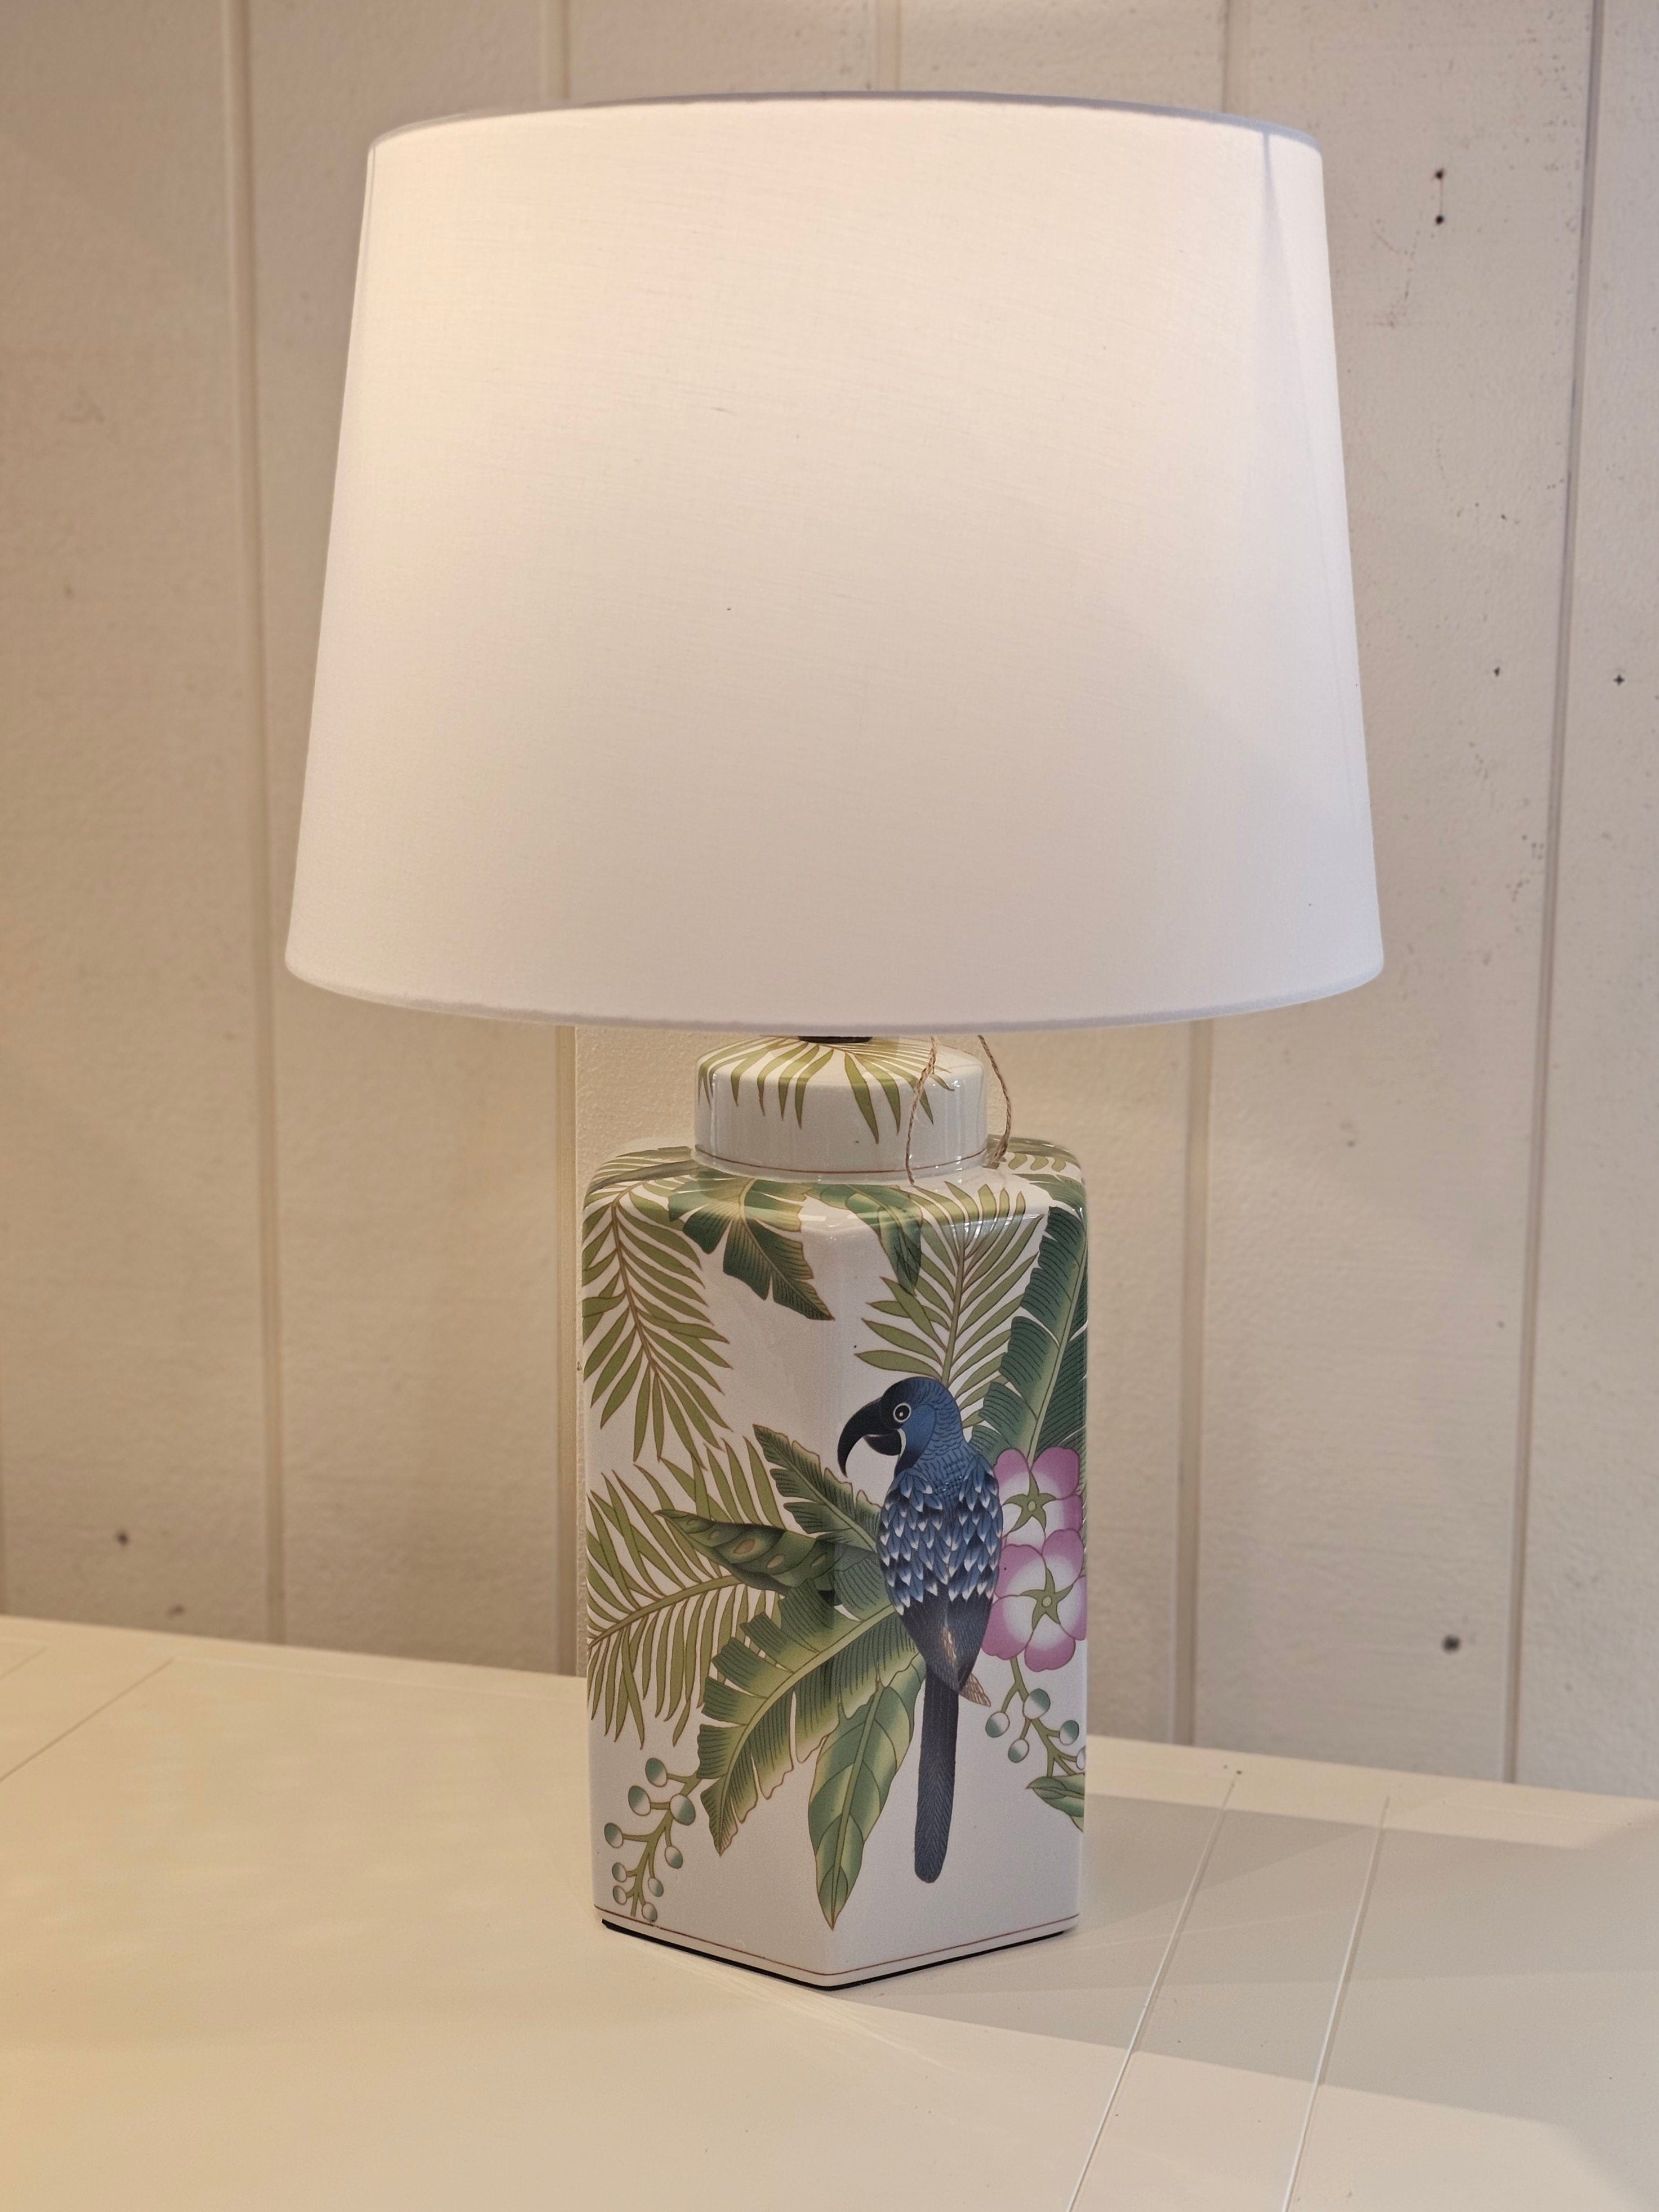 Haven & Space Berry LAMPS 34cm Amazon Lamp